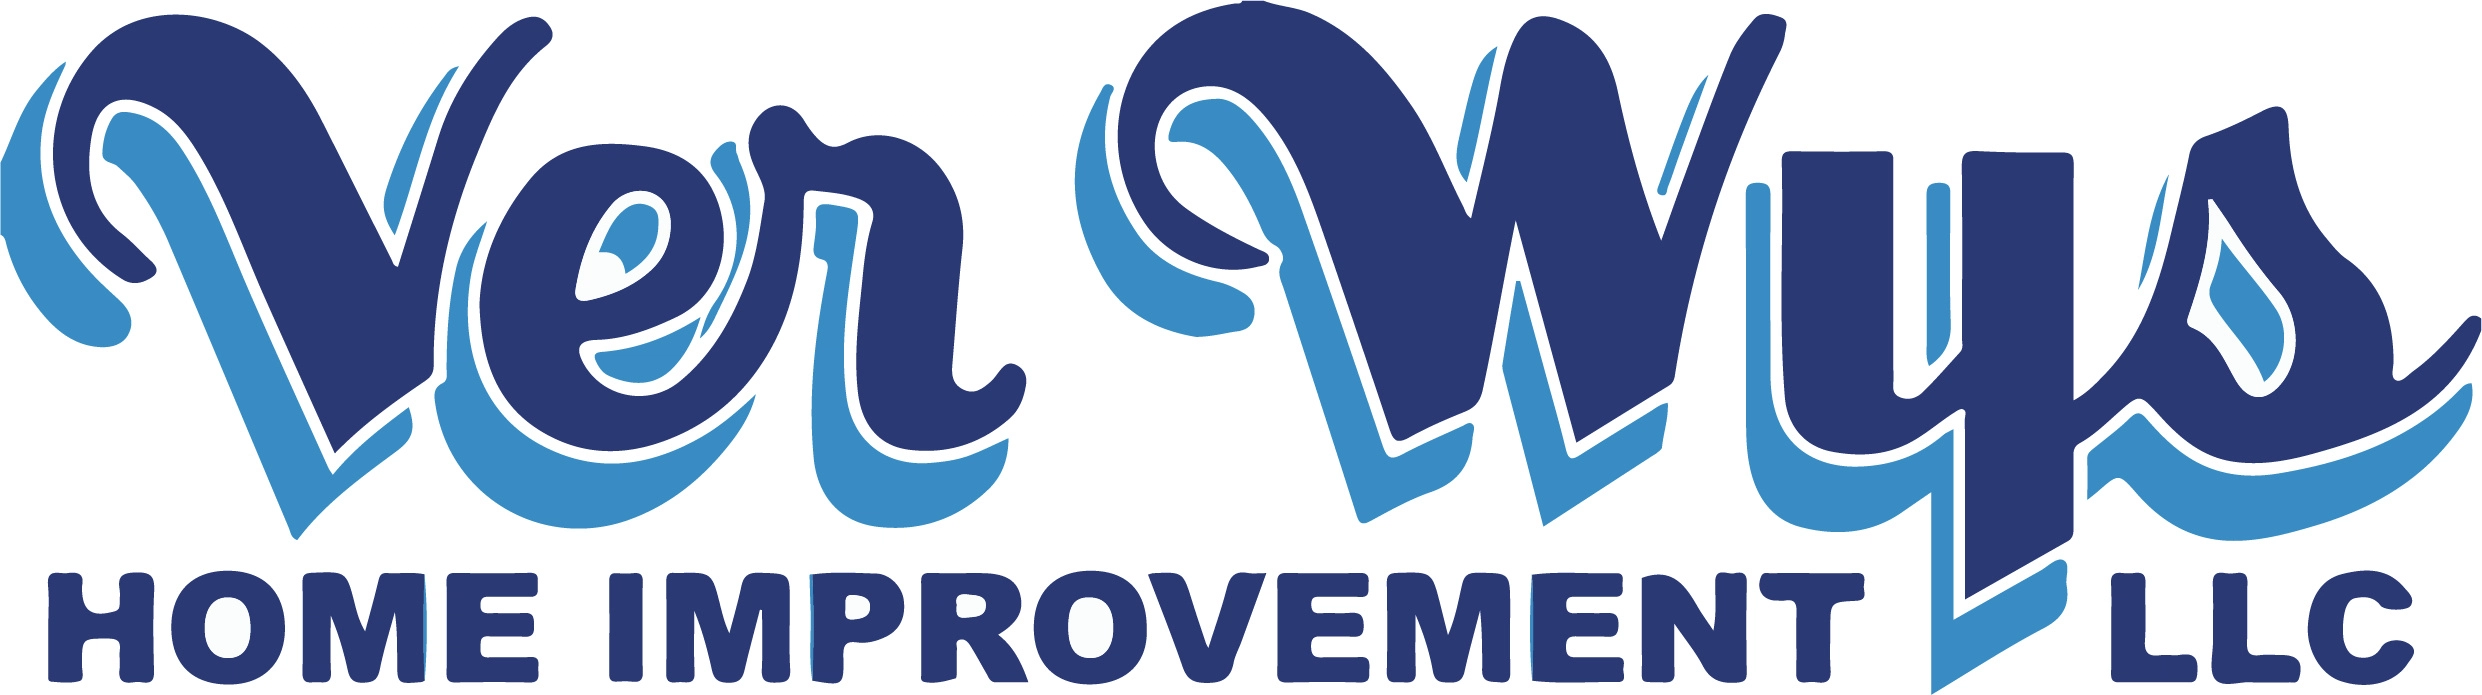 Ver Wys Home Improvement LLC Logo